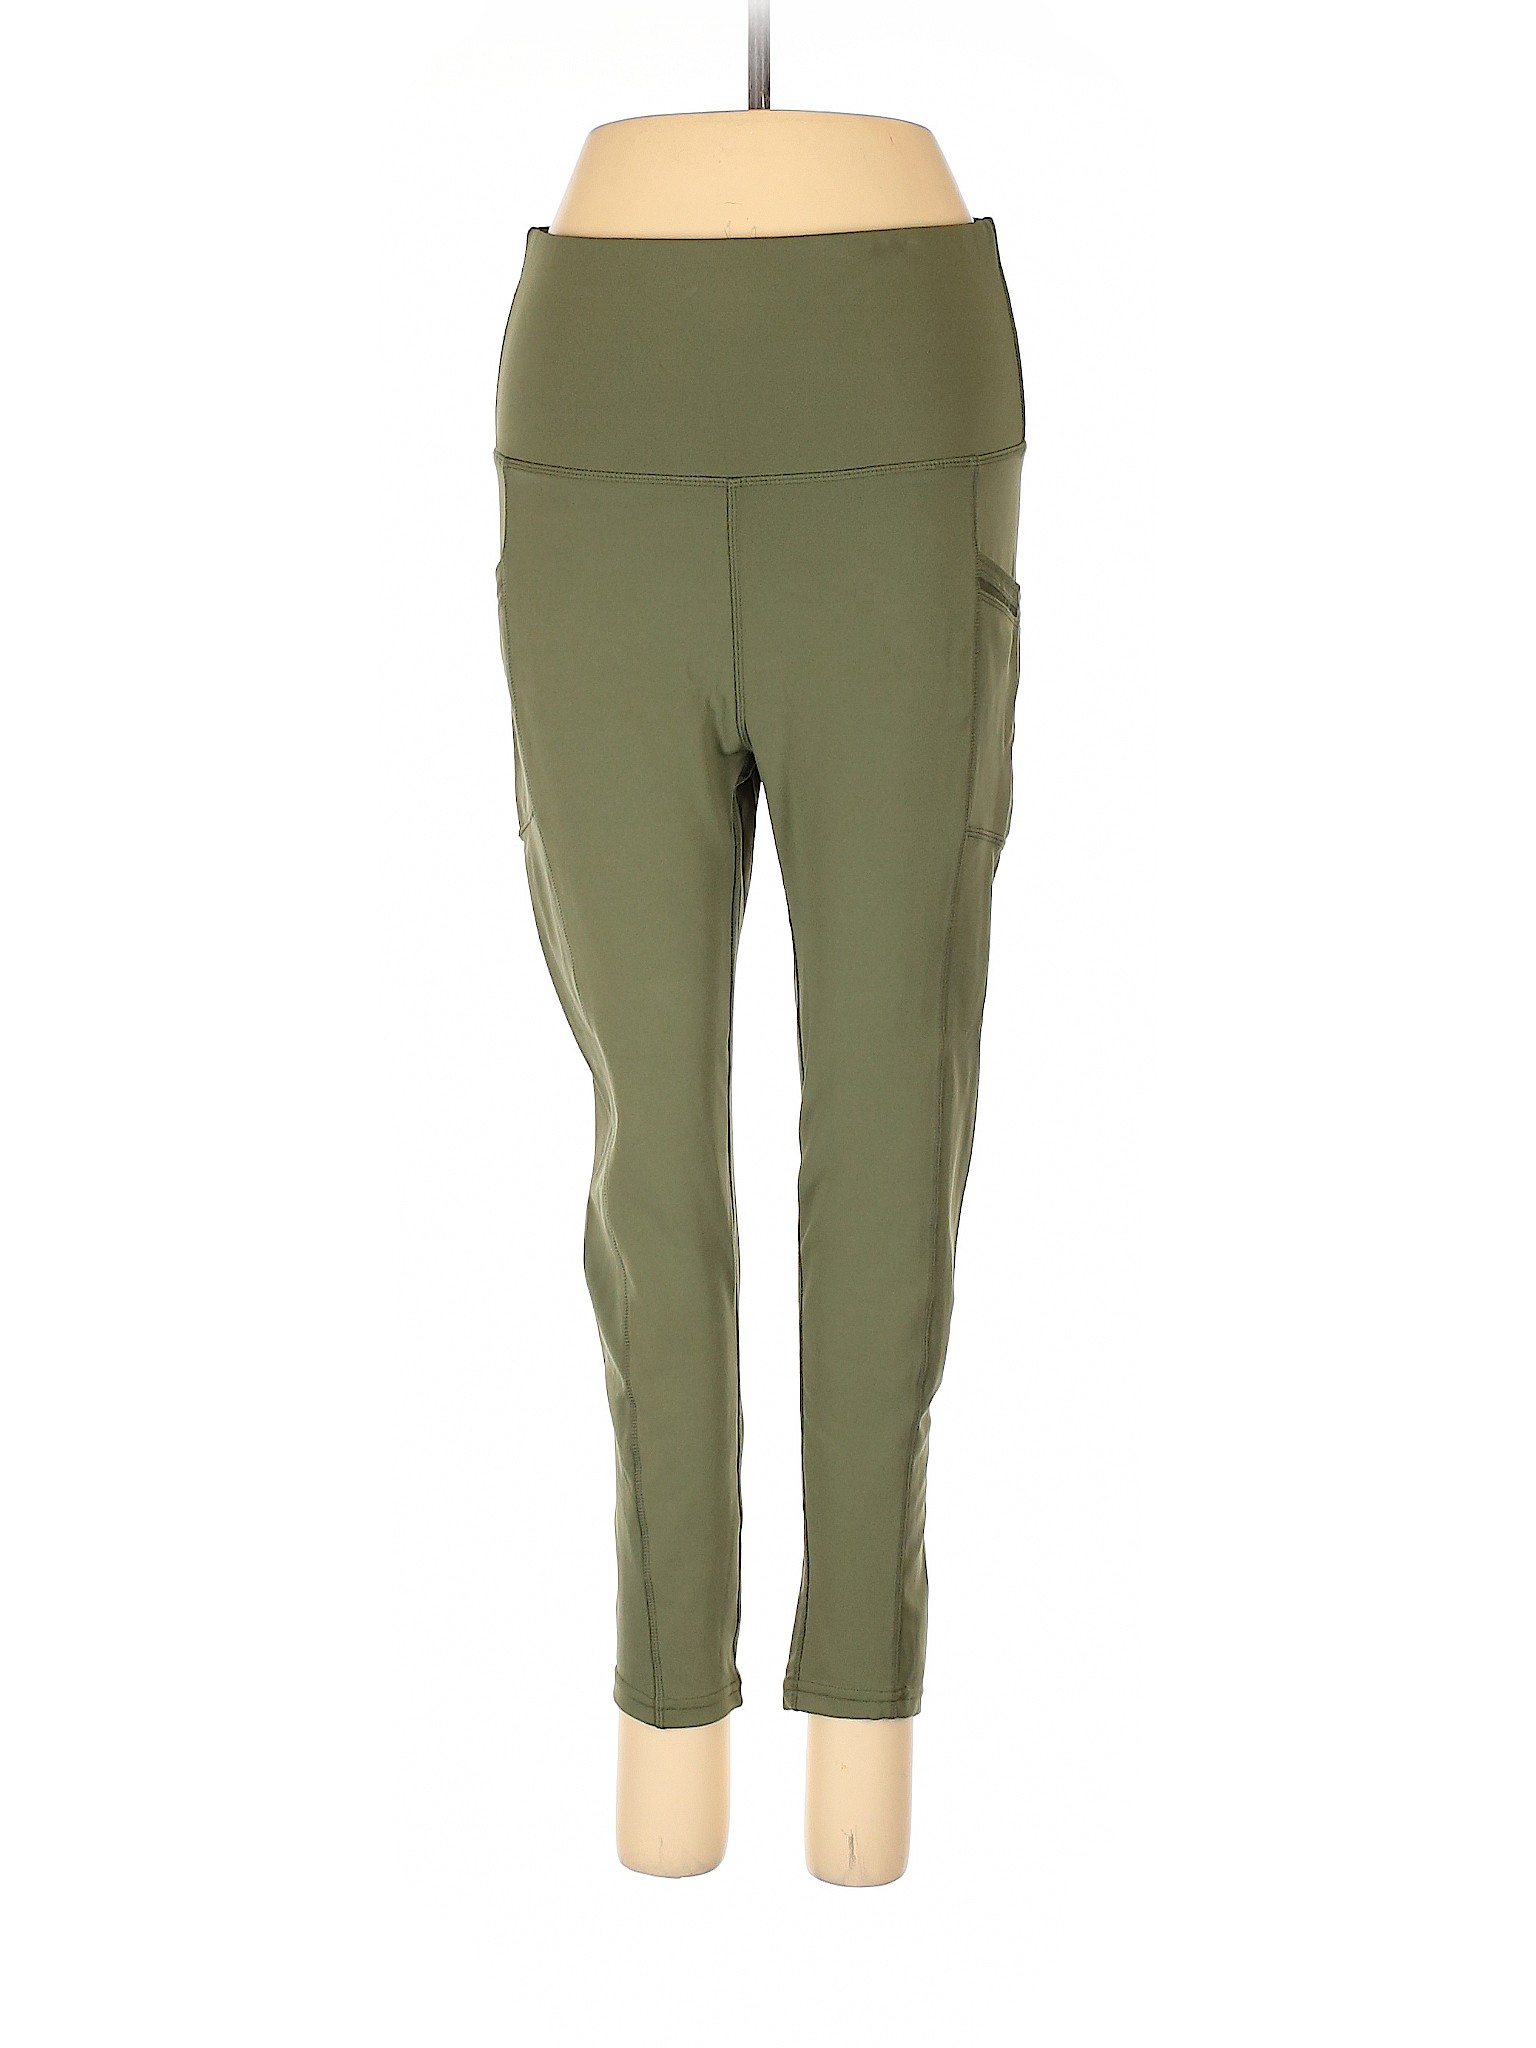 Ebb & Flow Women Green Active Pants M | eBay